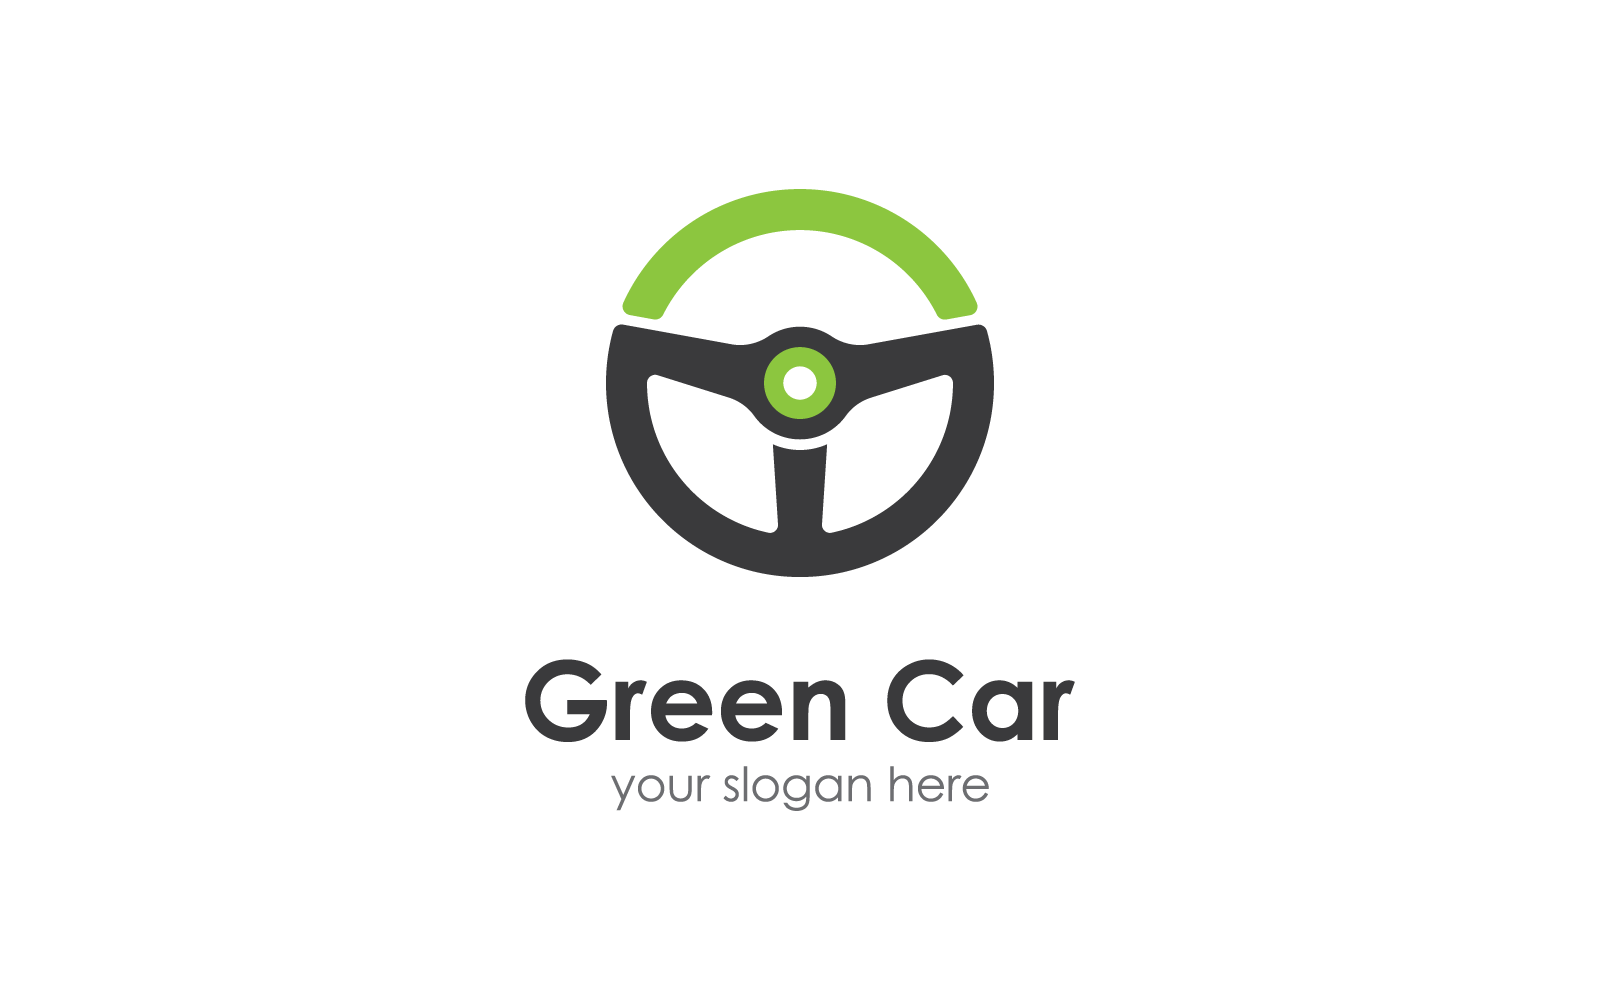 Steering wheel green car logo vector design